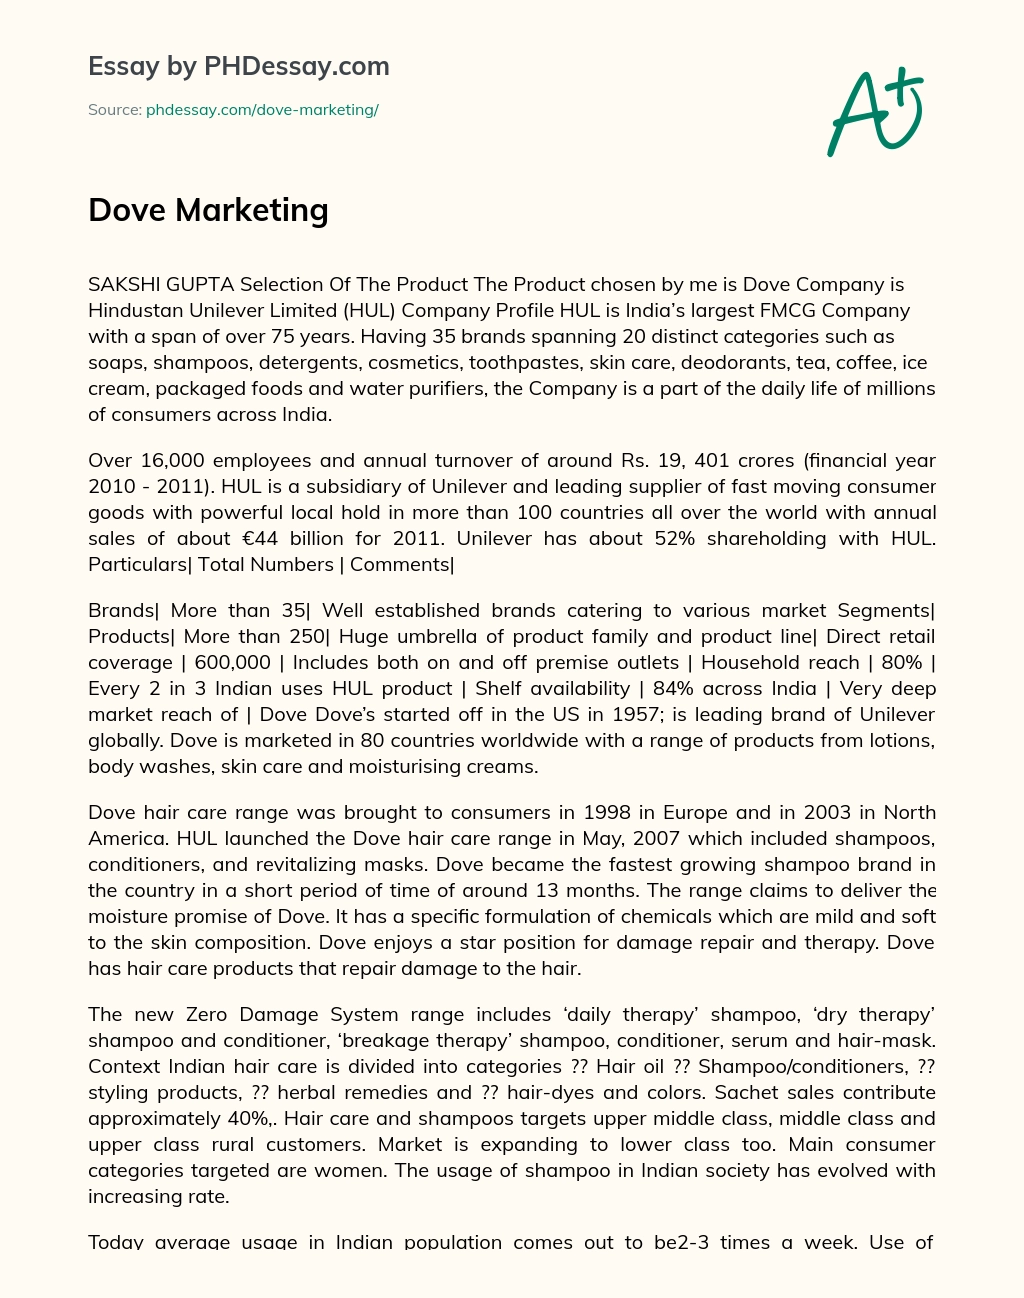 Dove Marketing essay